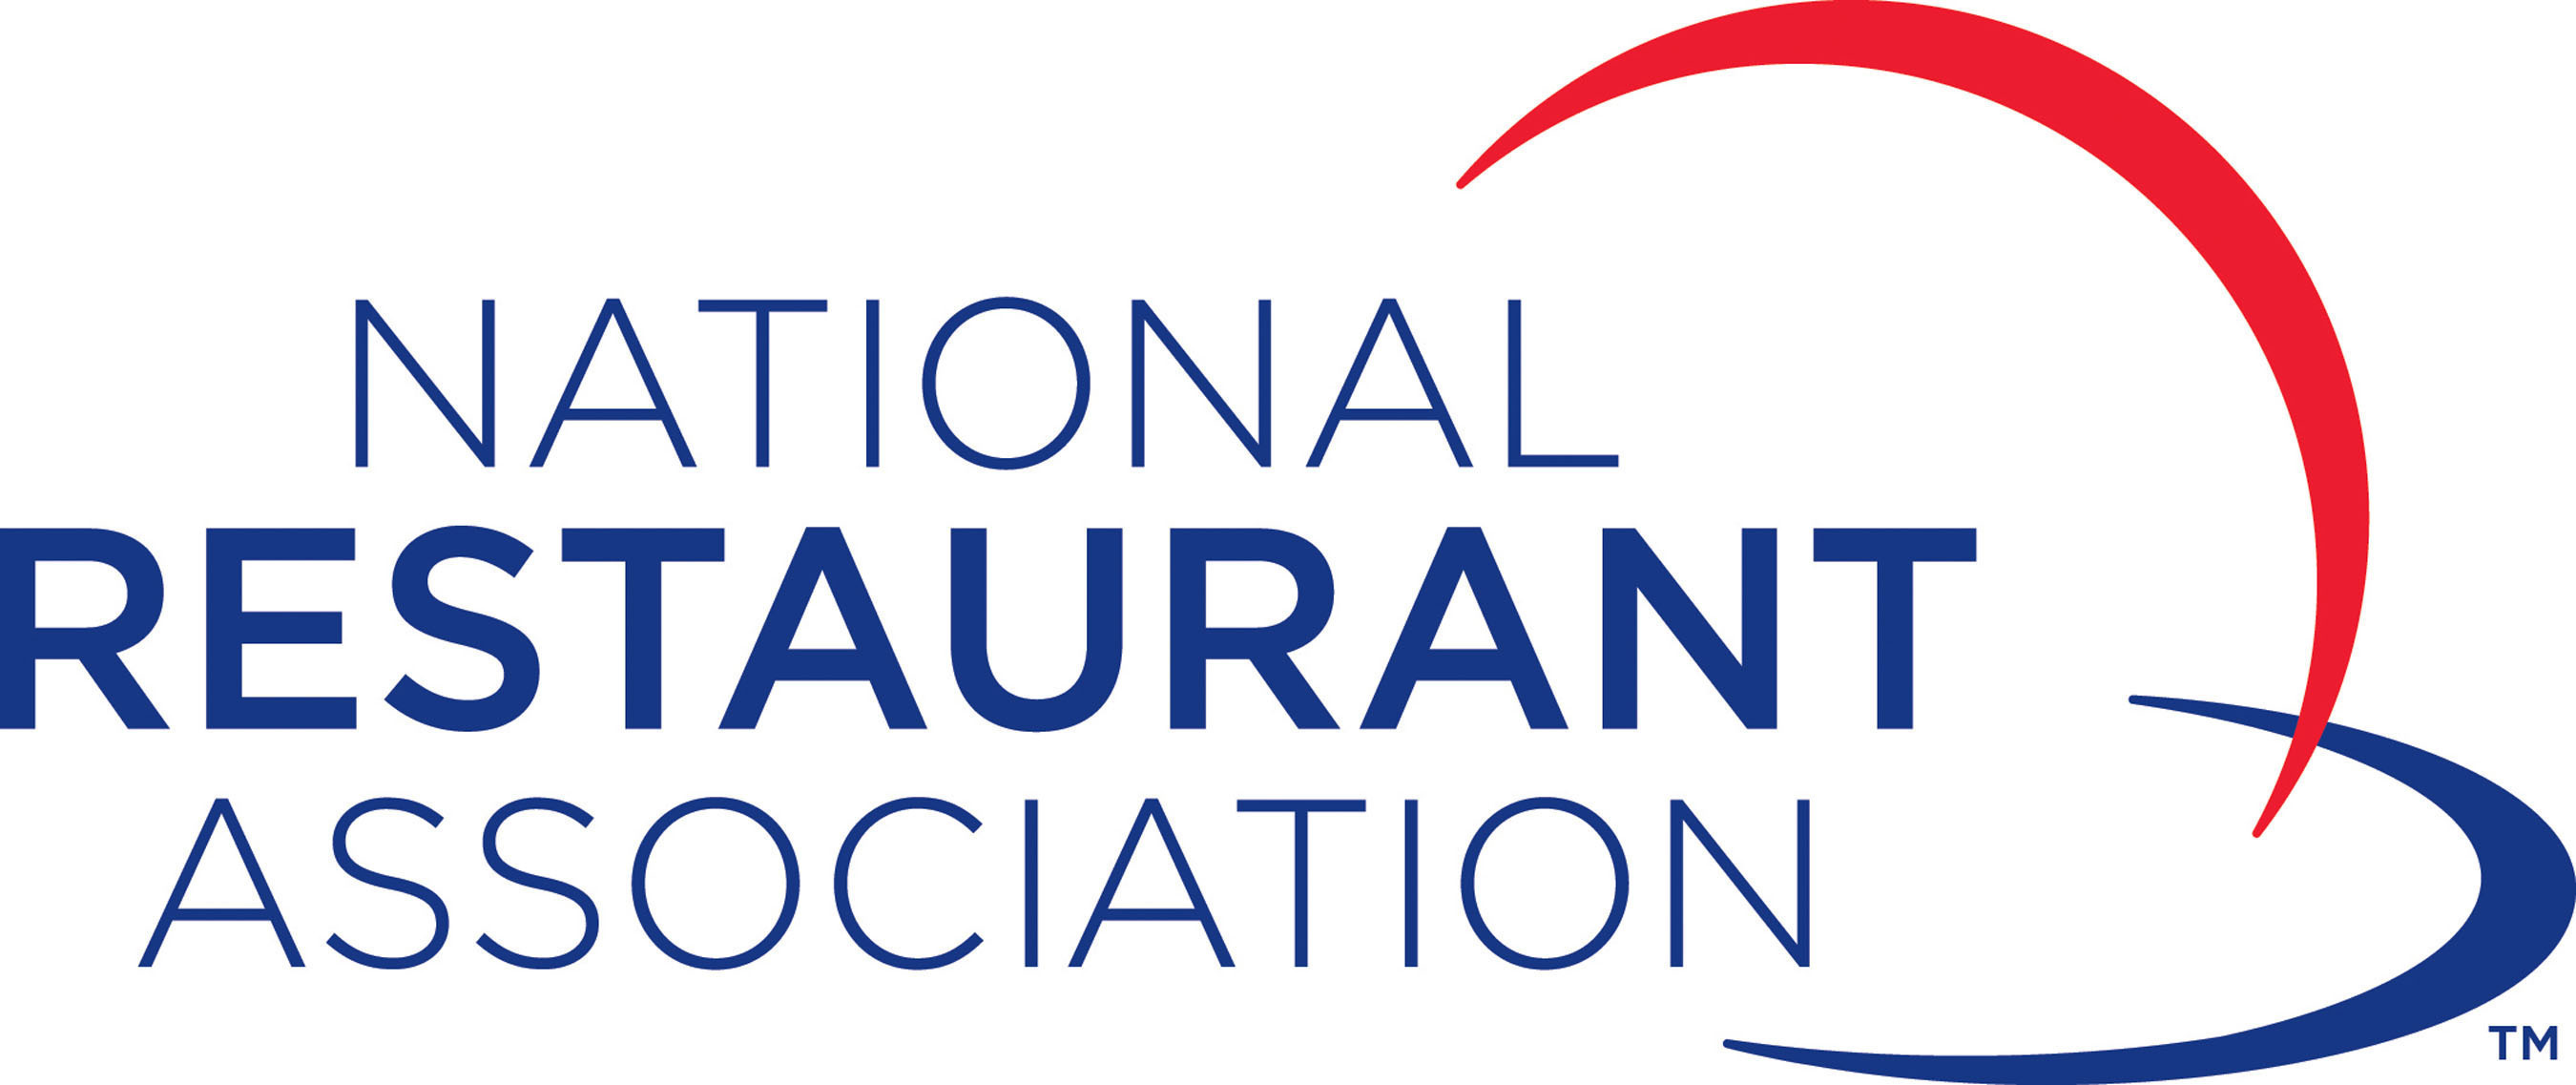 National Restaurant Association Logo. (PRNewsFoto/National Restaurant Association) (PRNewsFoto/NATIONAL RESTAURANT ASSOCIATION)